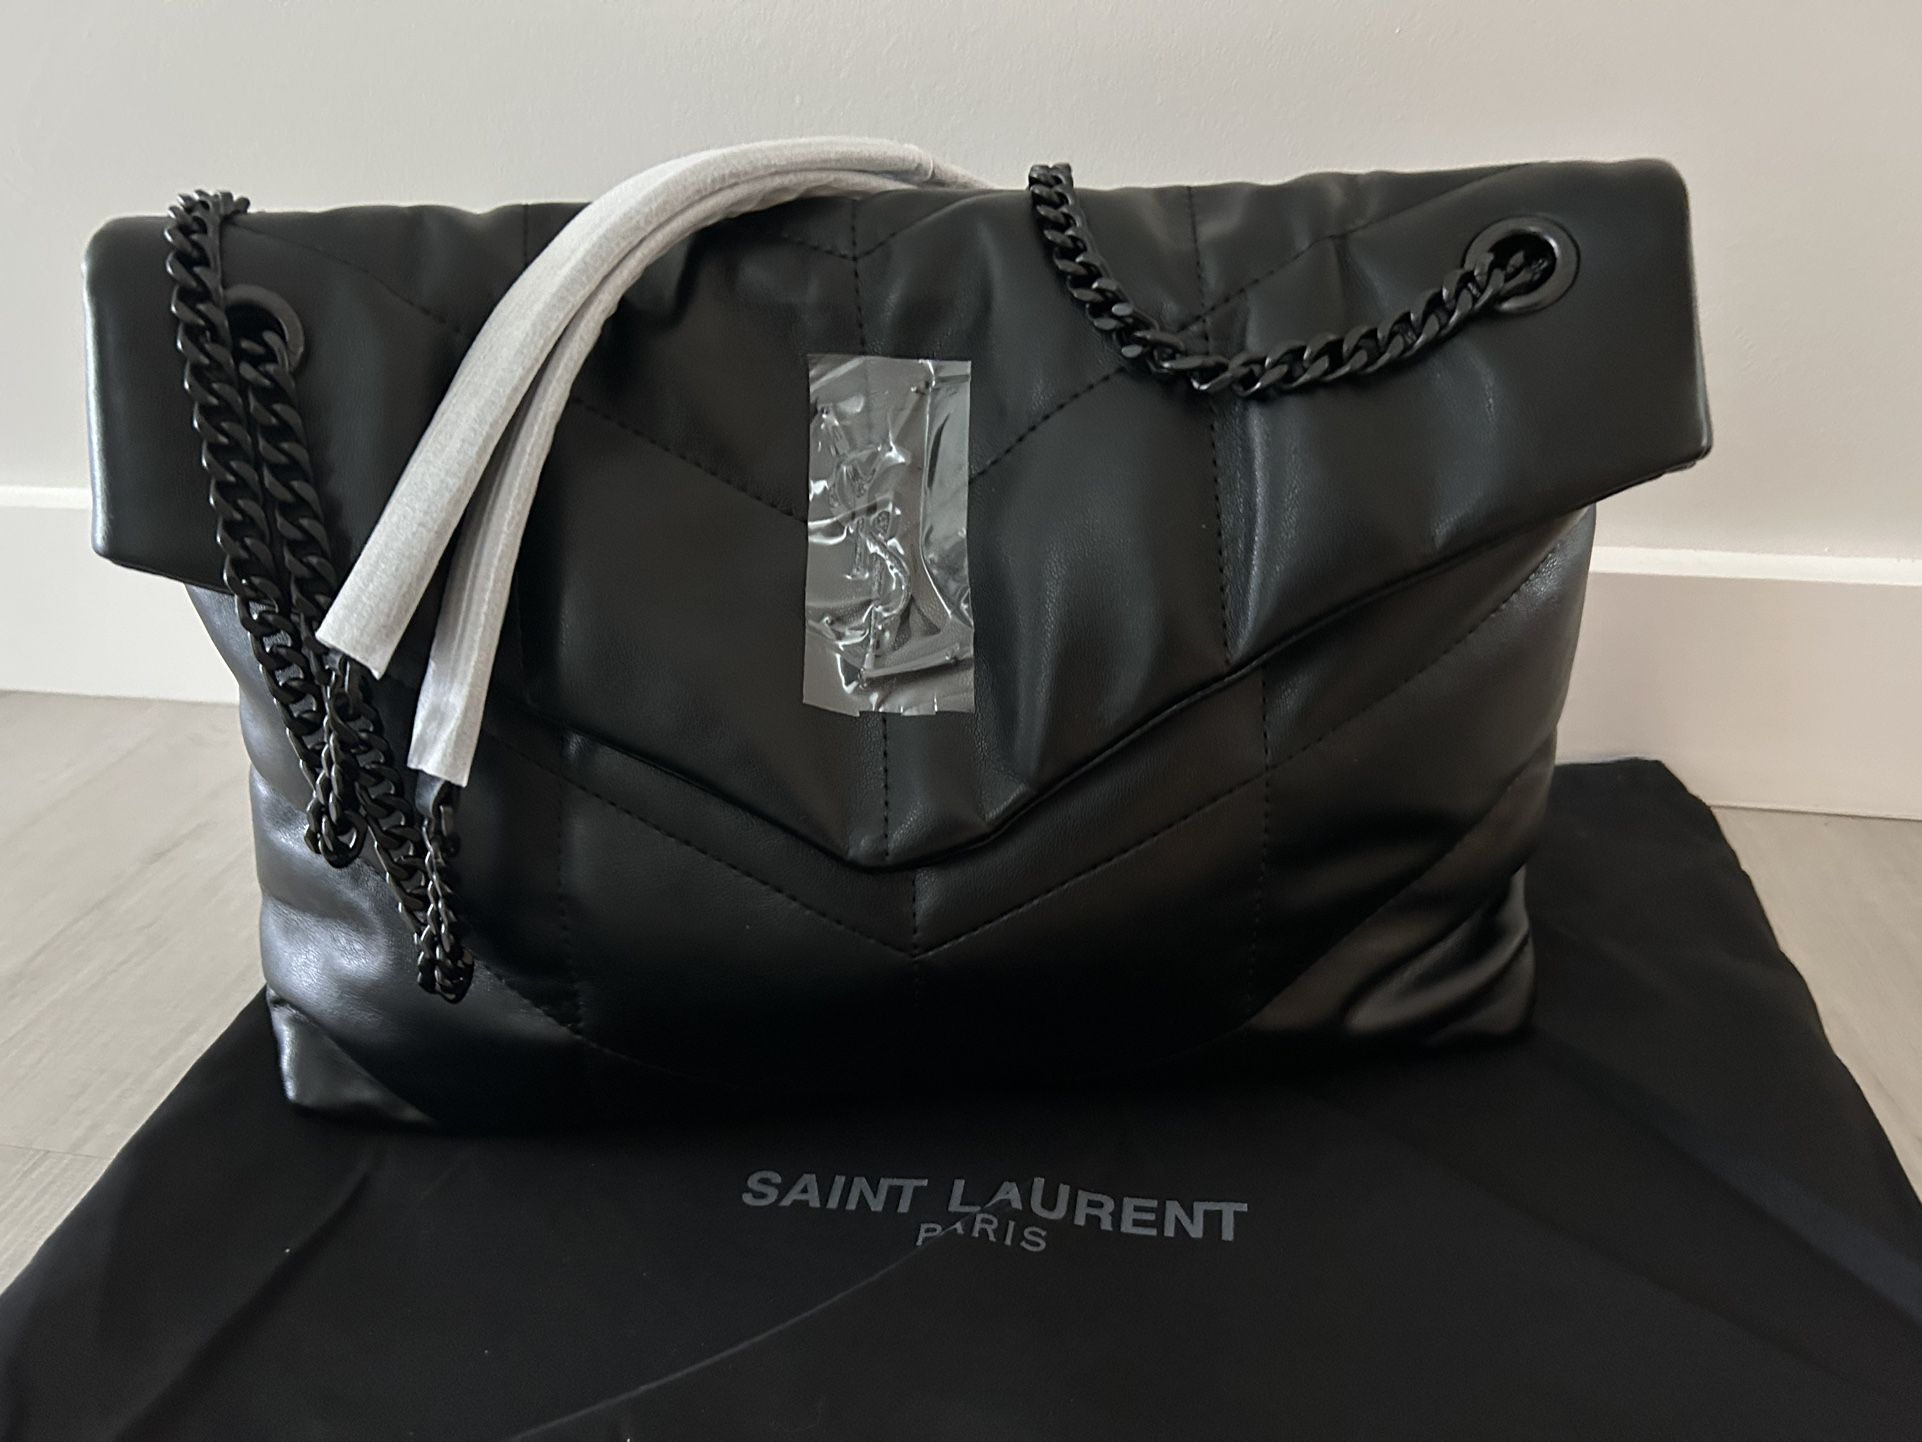 https://offerup.com/redirect/?o=WS5TbA==. Fashion Bag